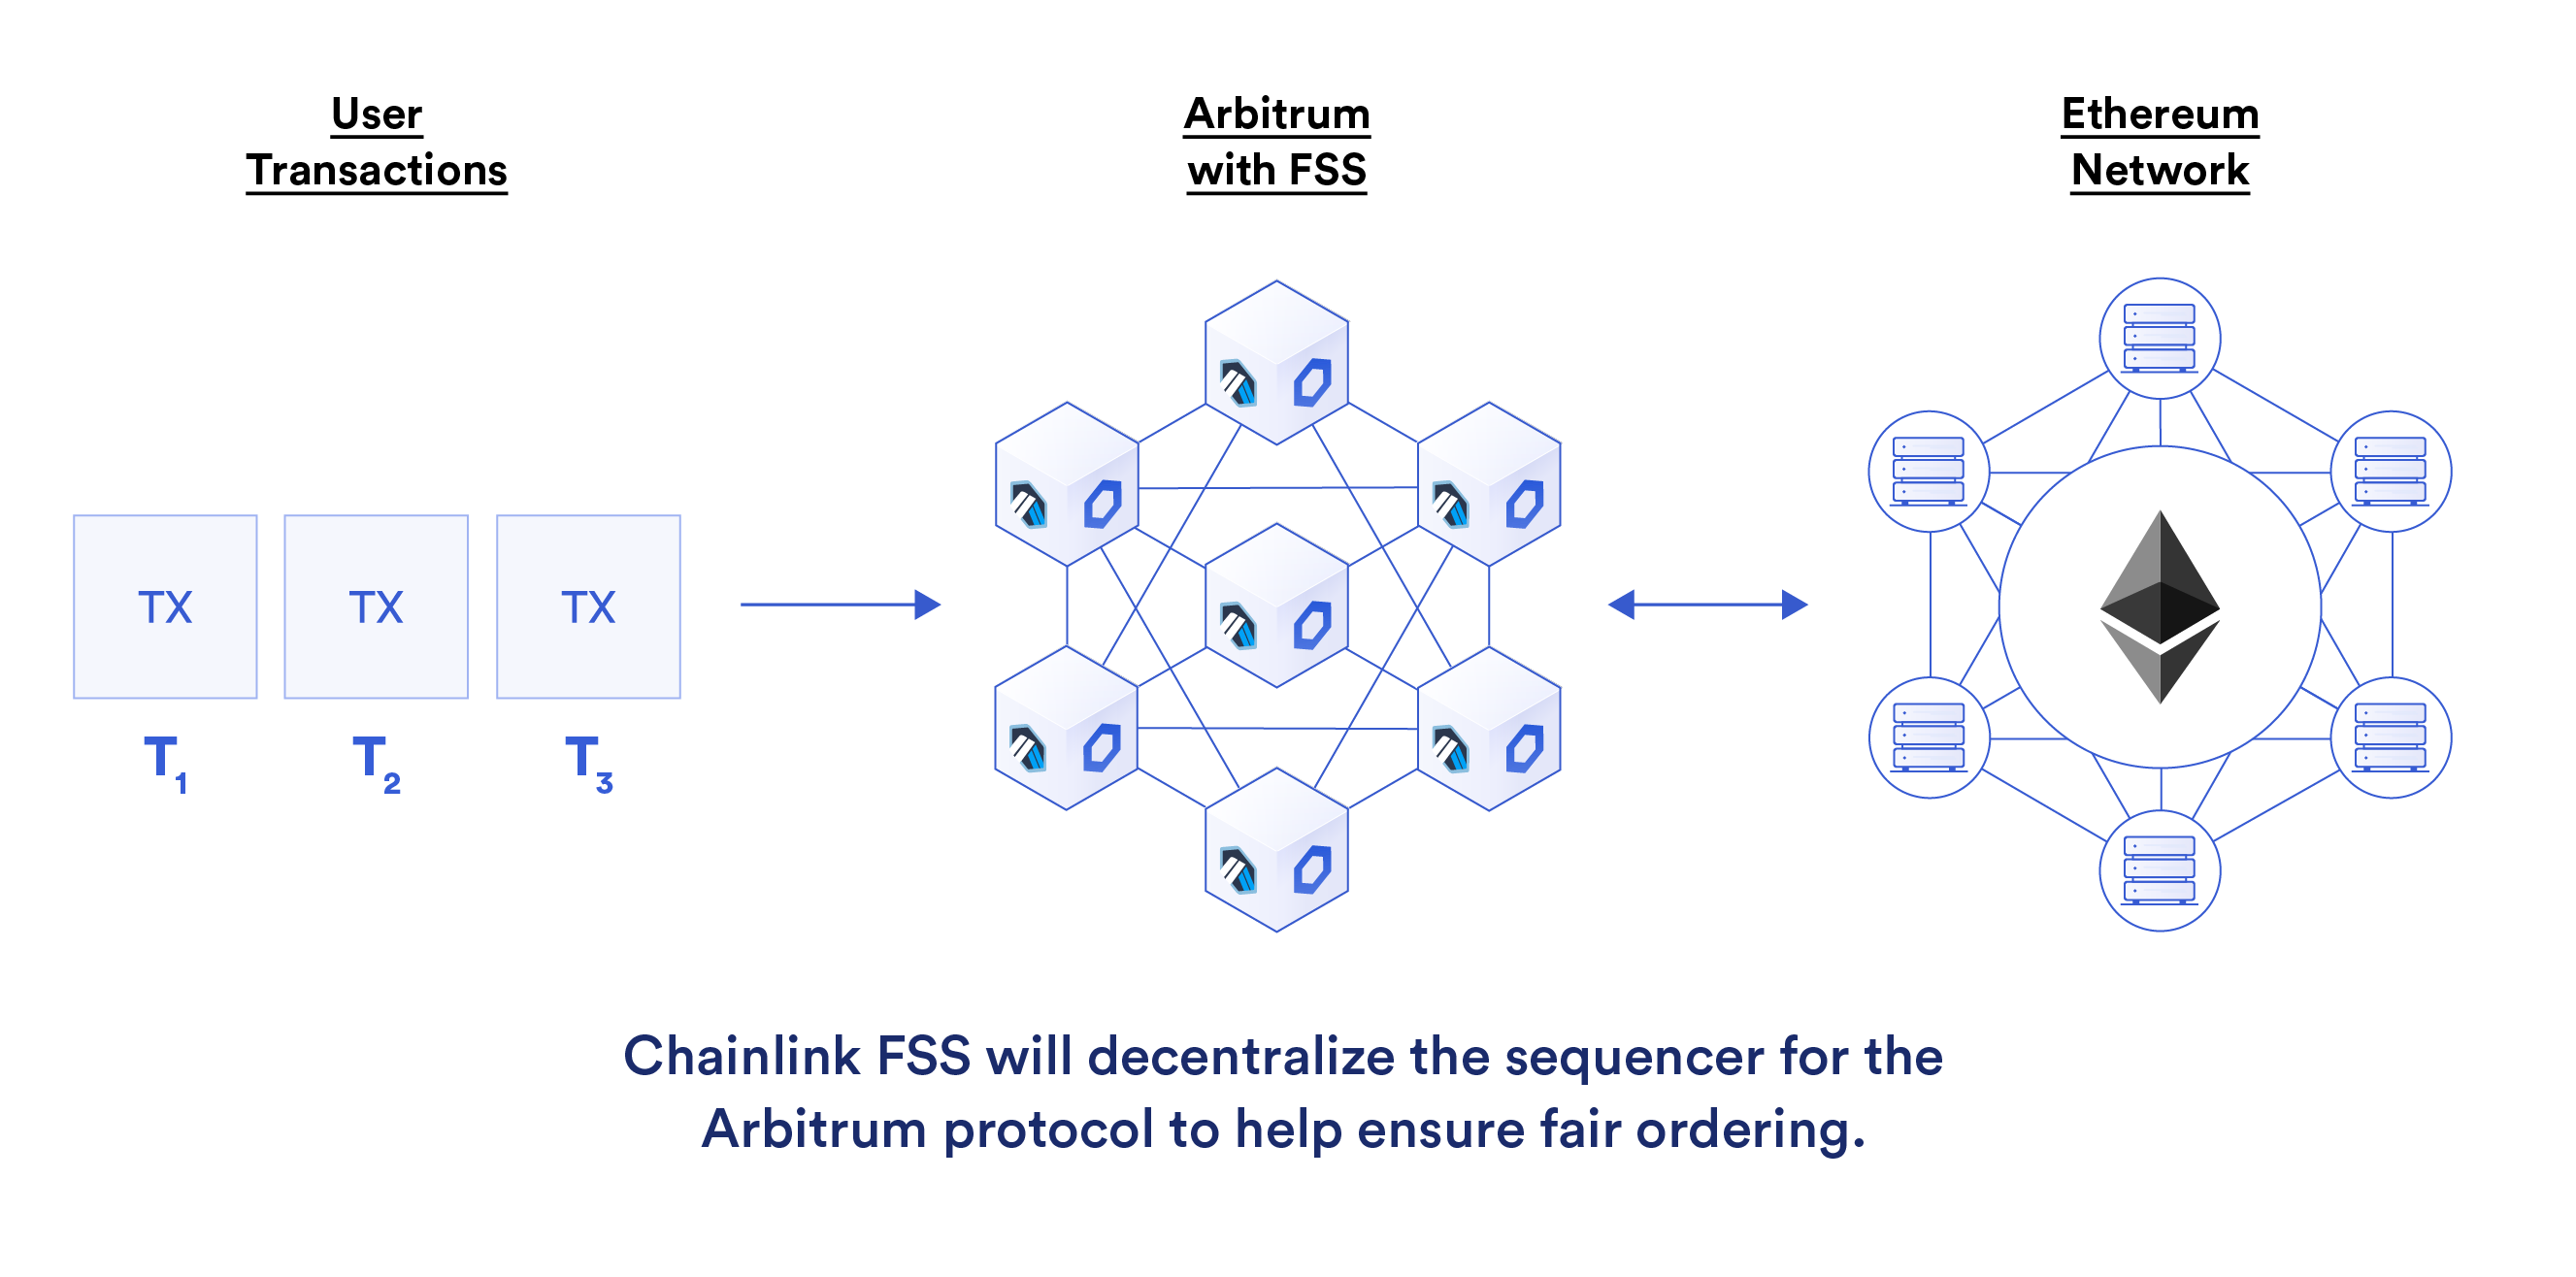 The Arbitrum protocol with FSS